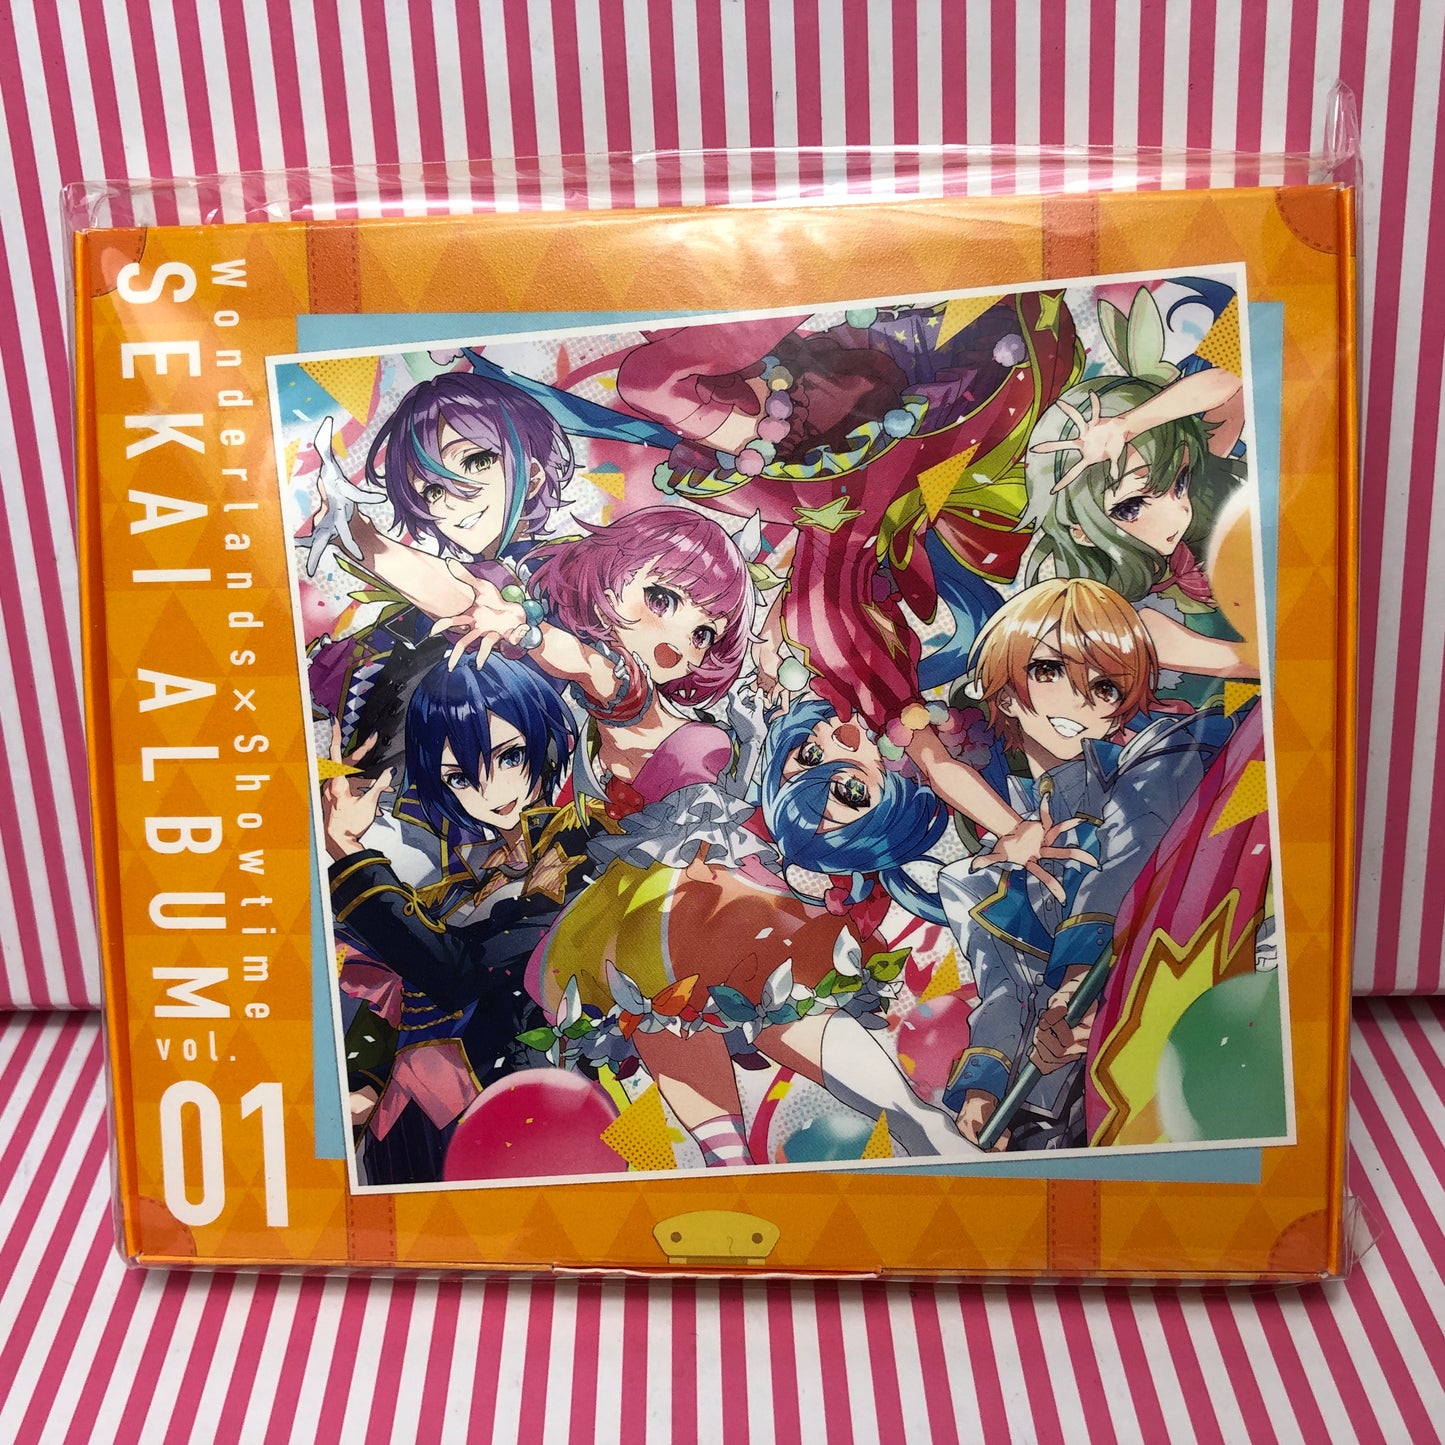 Project Sekai Colorful Stage! ft. Hatsune Miku Wonderlands x Showtime Sekai Album Vol. 1 [First Press Ed.] (CD + Acrylic Support + Sticker)